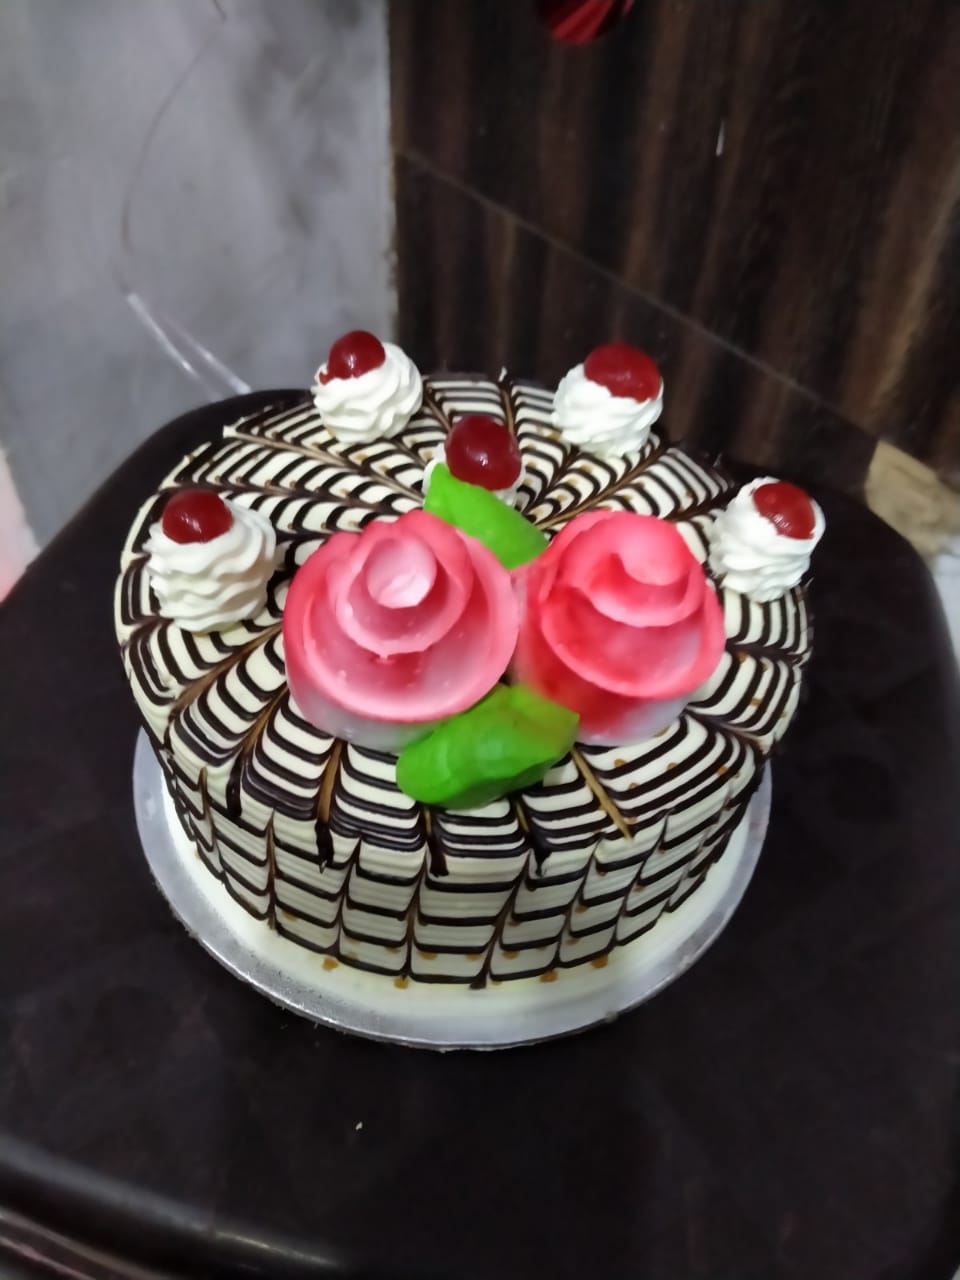 File:UAE Wikidata 7 th Birthday Cake cutting.jpg - Wikimedia Commons